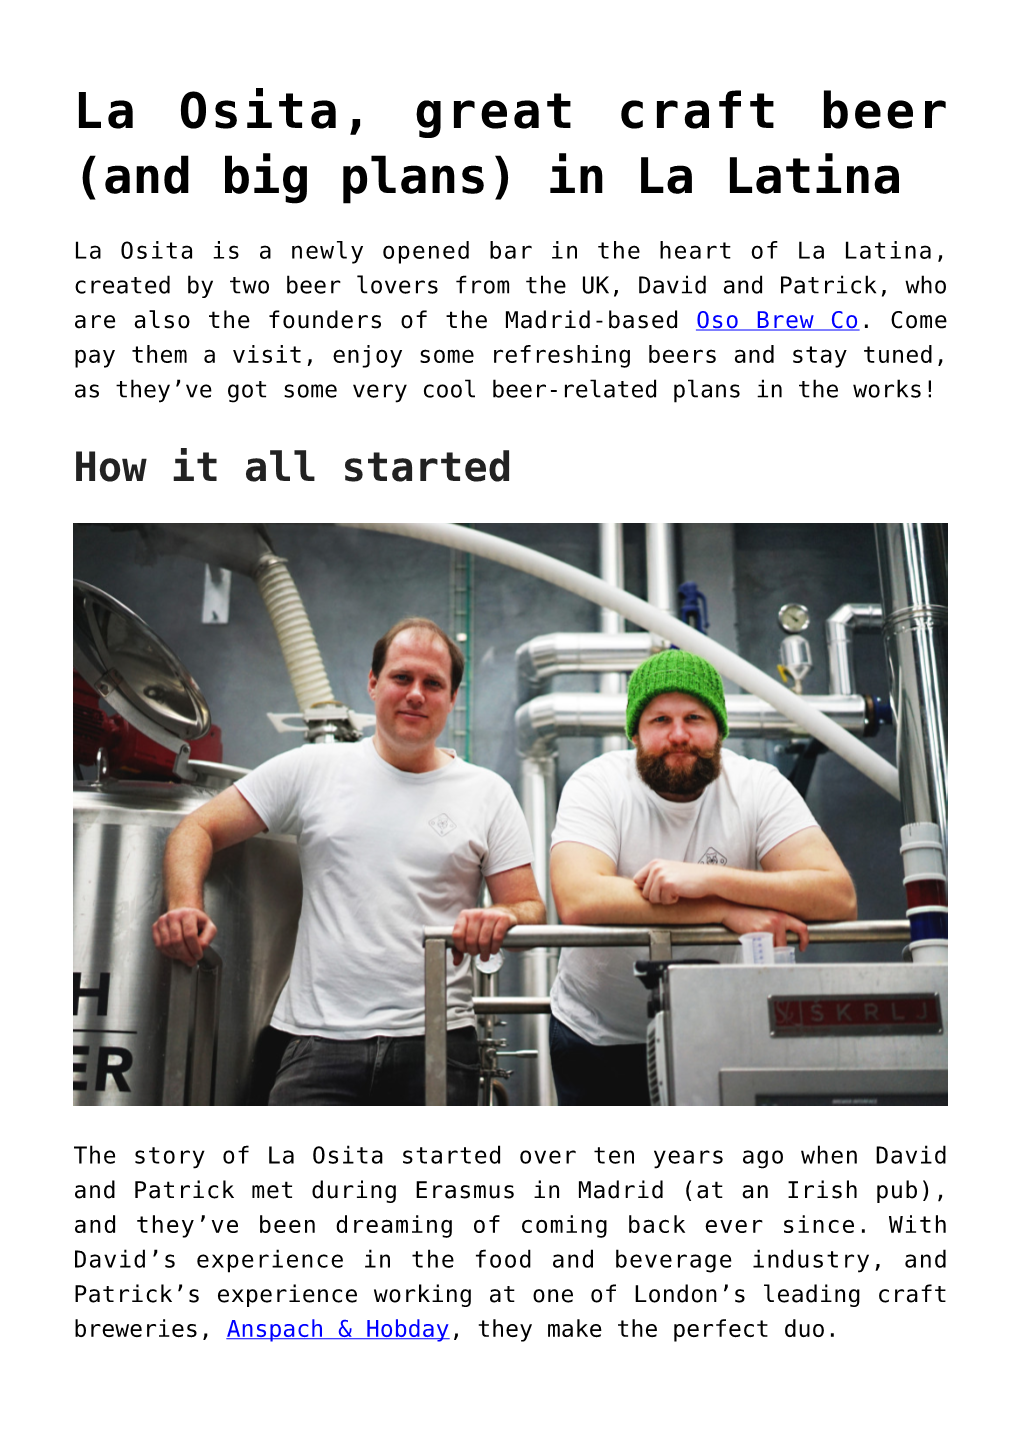 La Osita, Great Craft Beer (And Big Plans) in La Latina